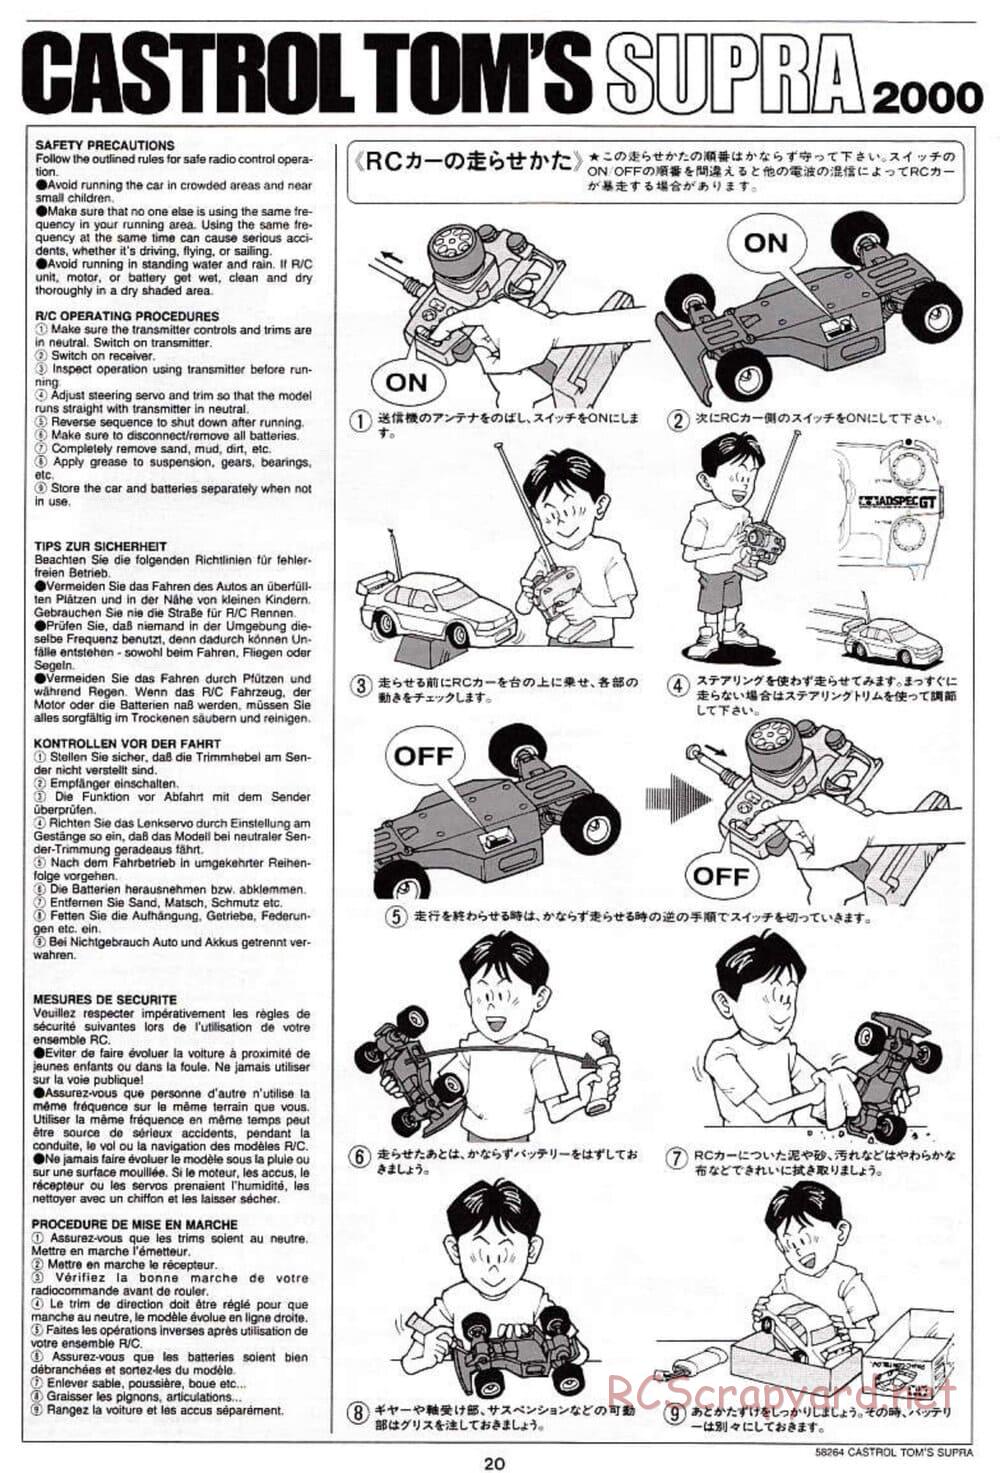 Tamiya - Castrol Tom's Supra 2000 - TL-01 Chassis - Manual - Page 20